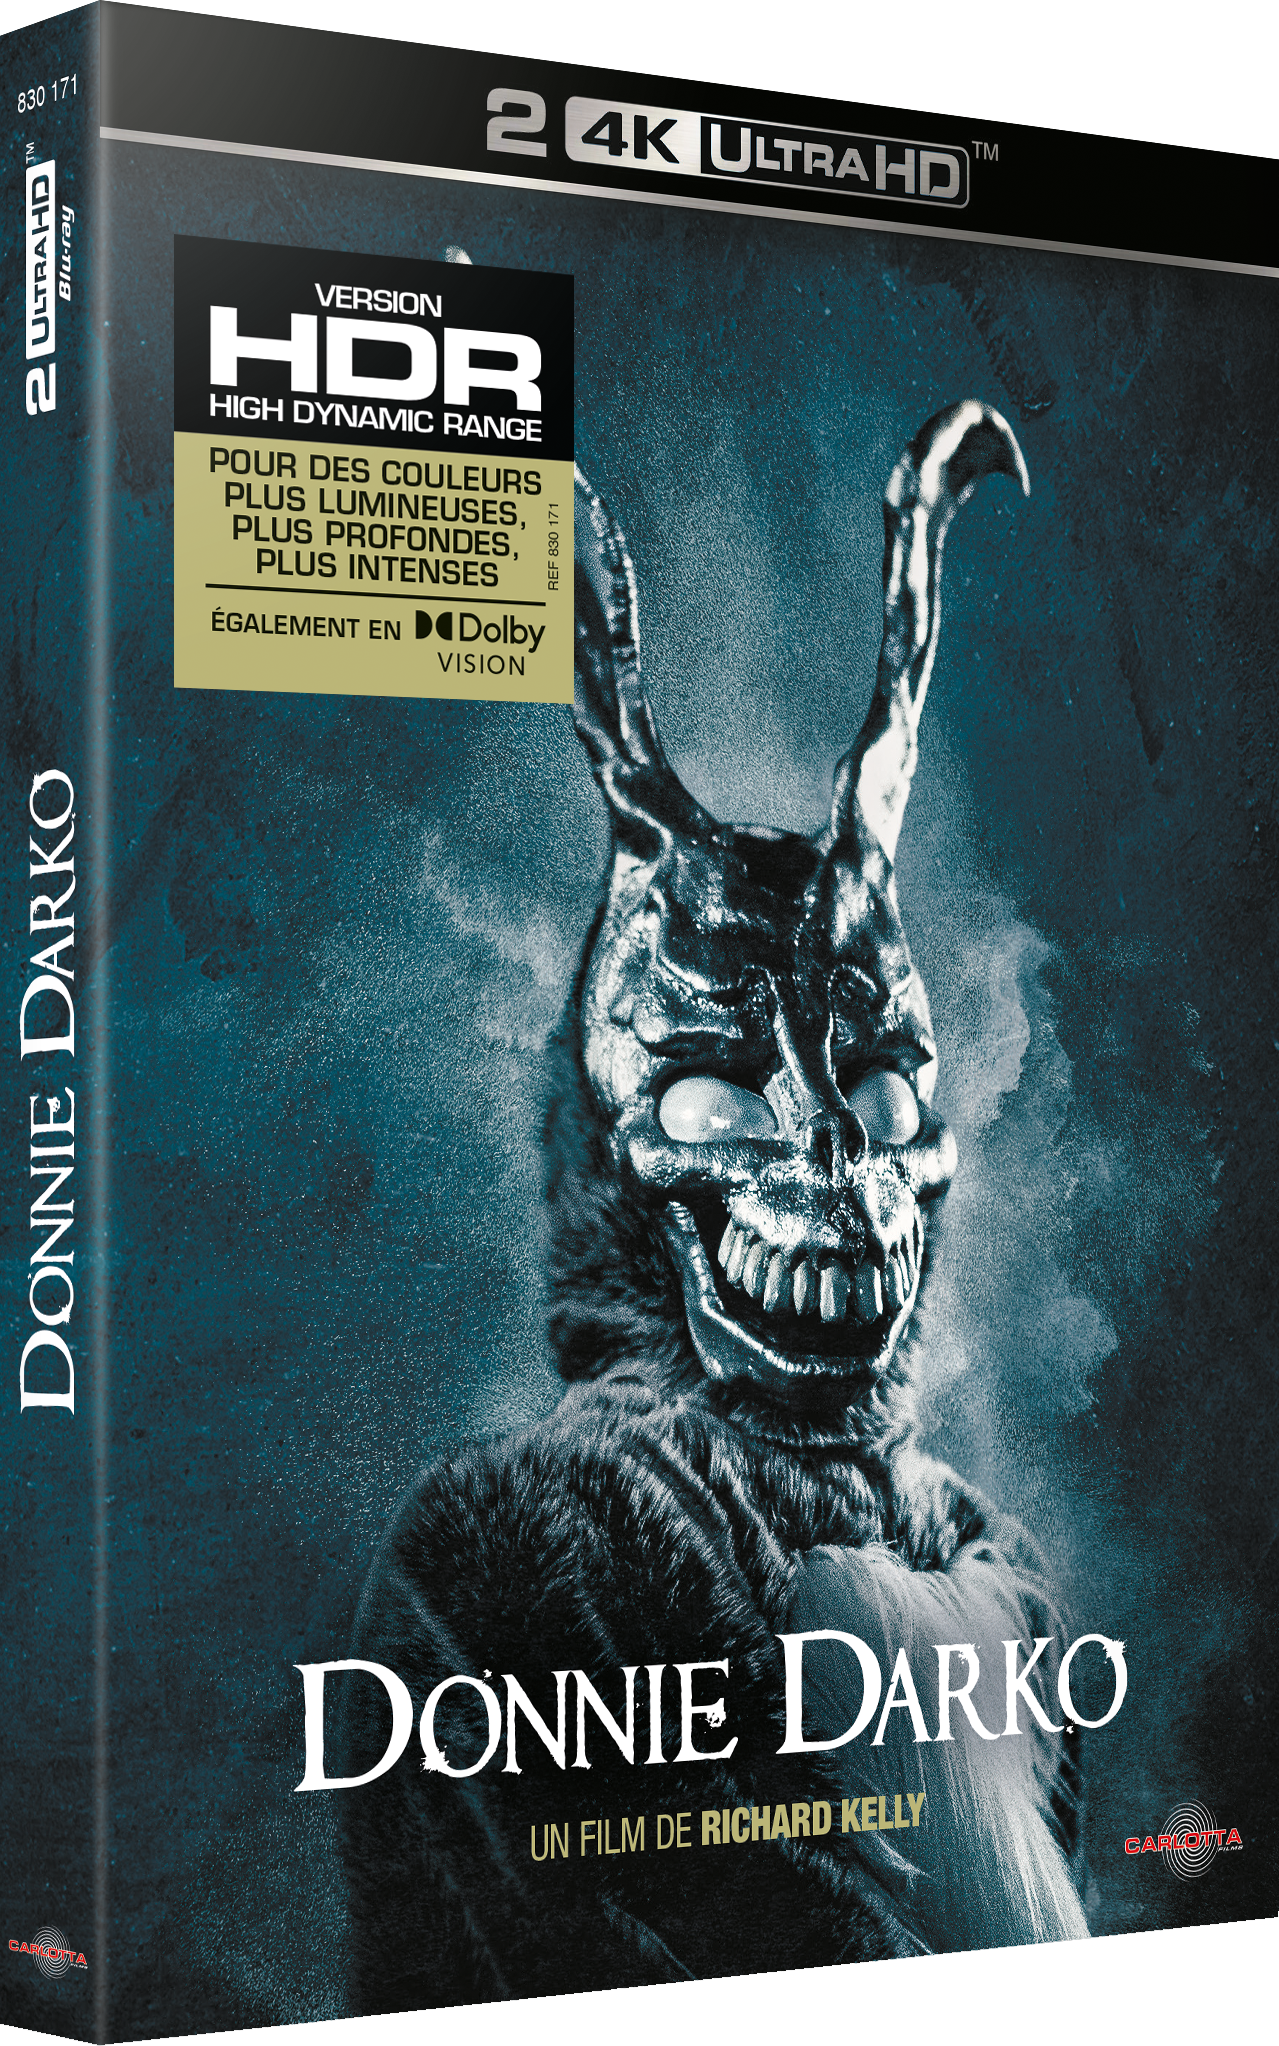 Donnie Darko de Richard Kelly - 4K UHD